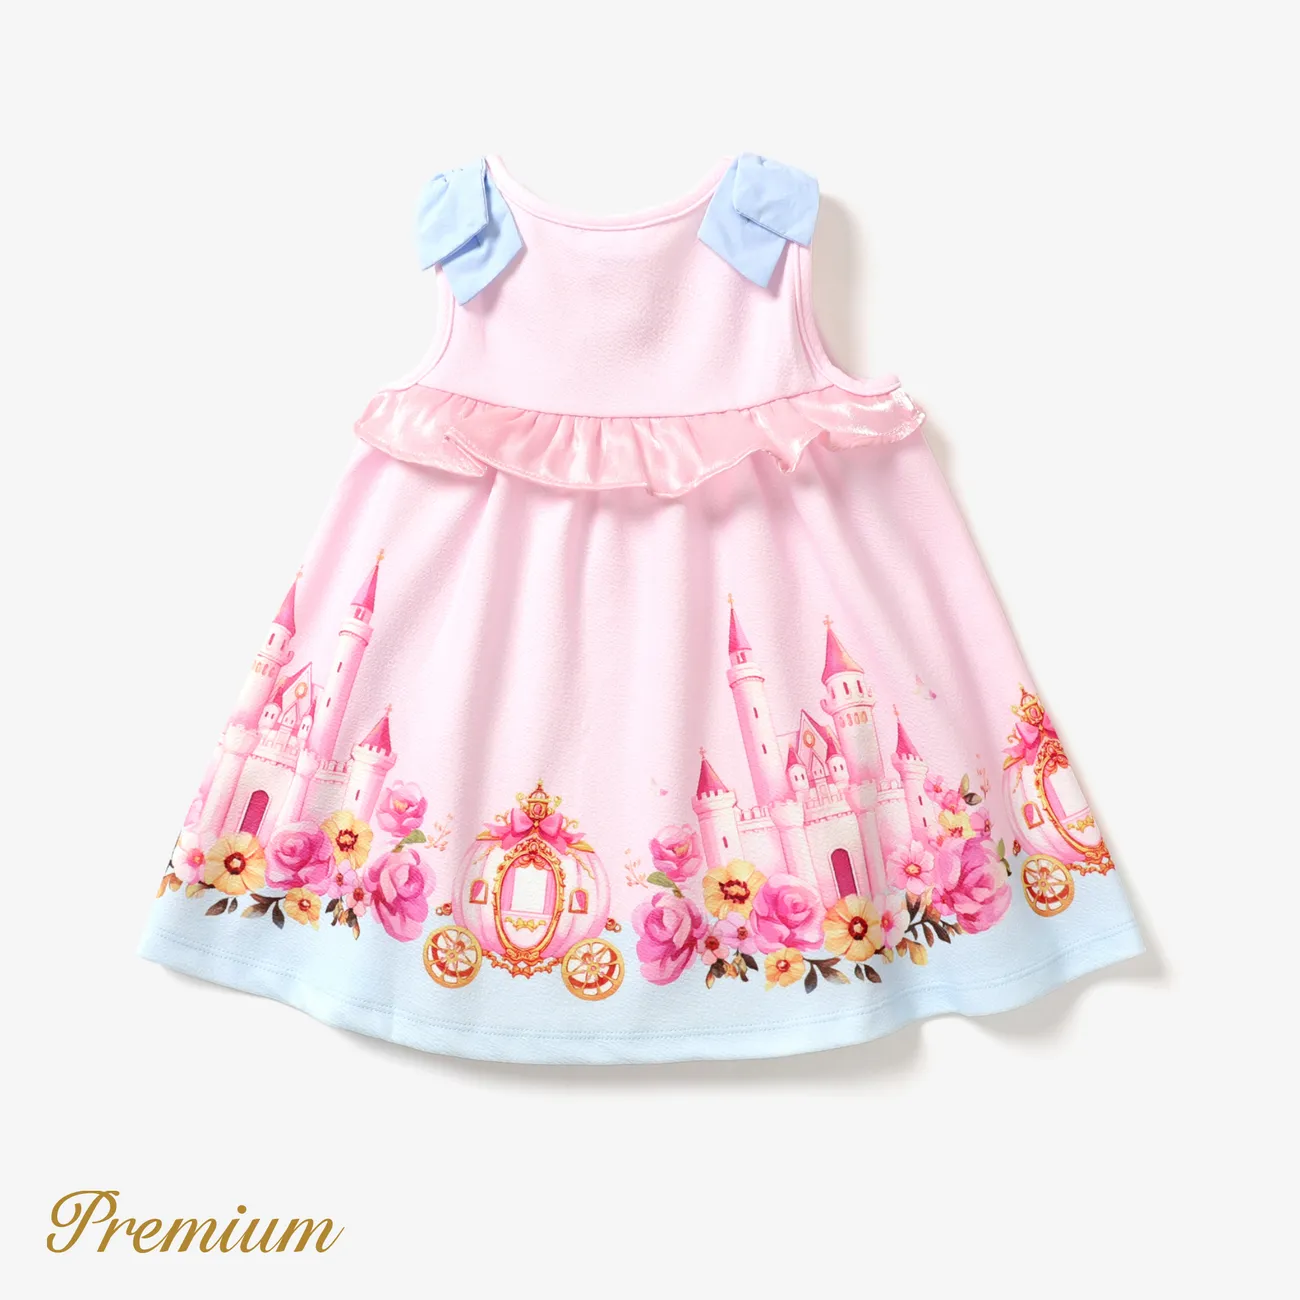 Baby Girl Elegant Flower Romper/Dress with Ruffle Edge Pink/Blue big image 1